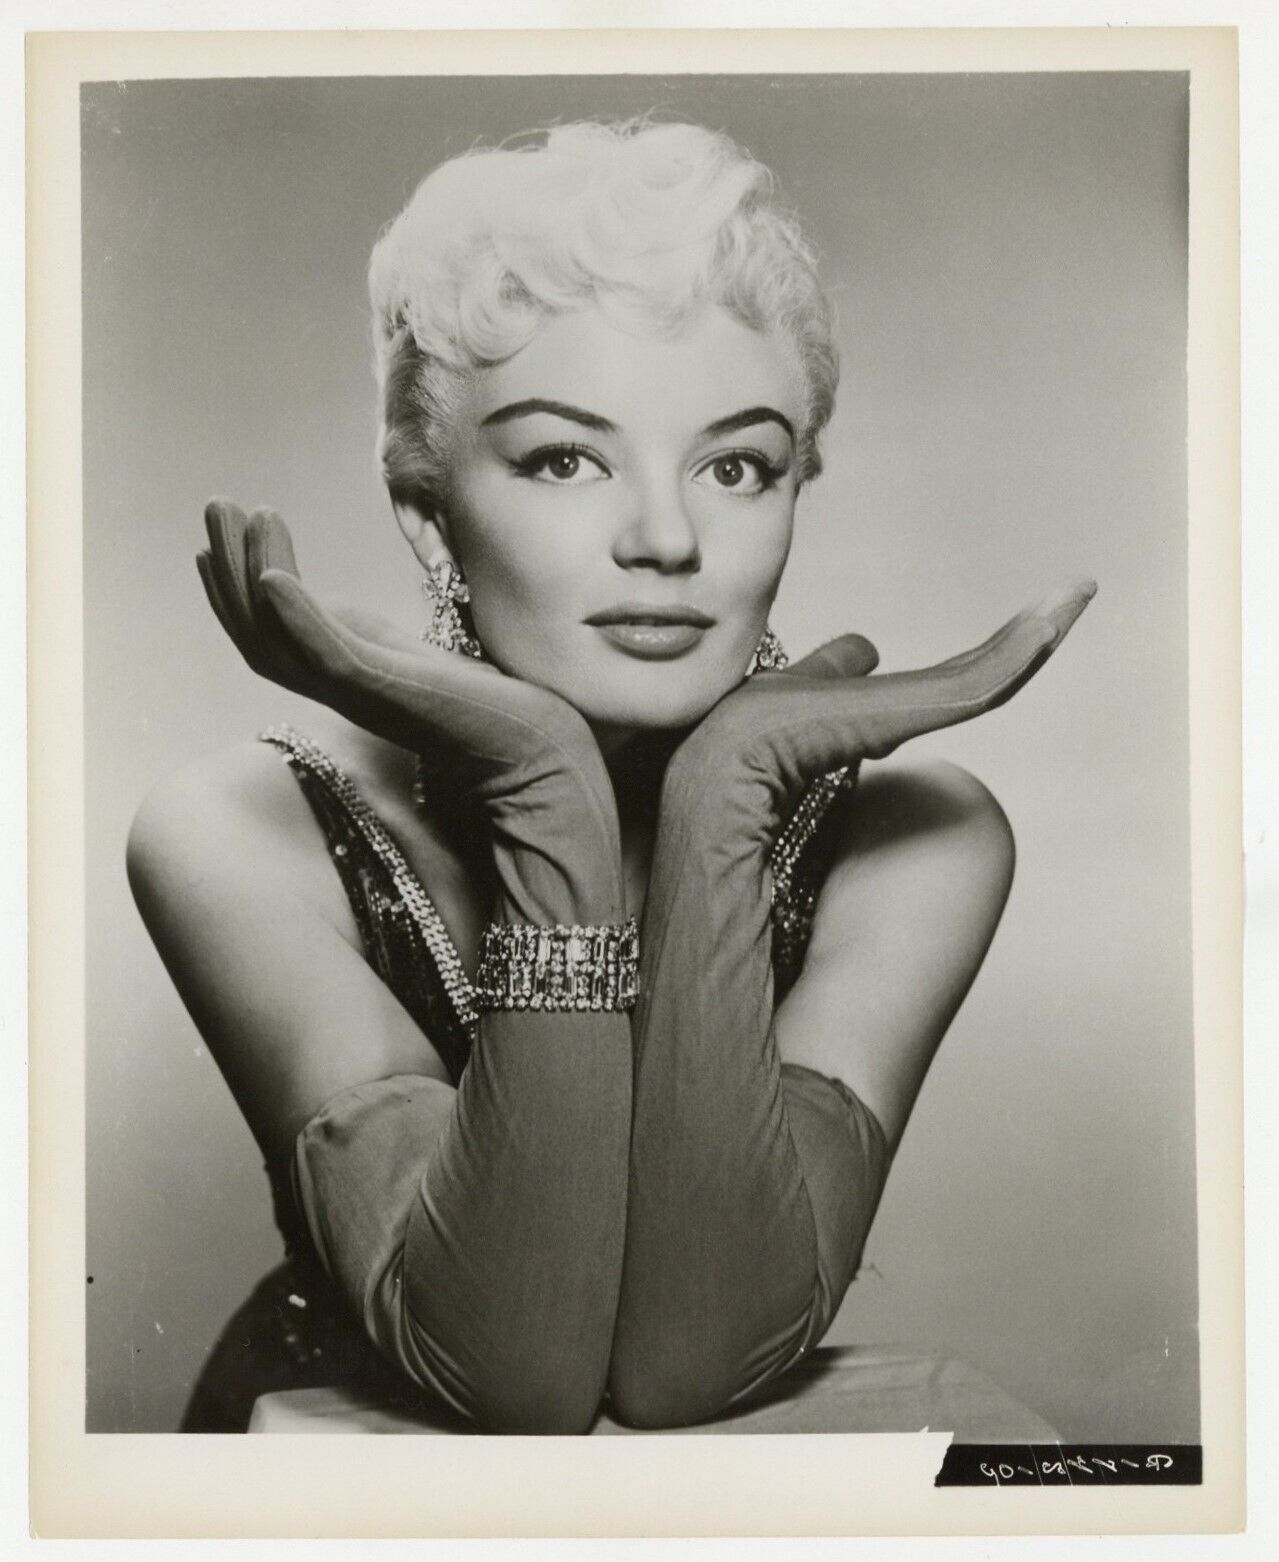 Sheree North 1954 Glamorous Portrait Blond Bombshell Original Photo J9959